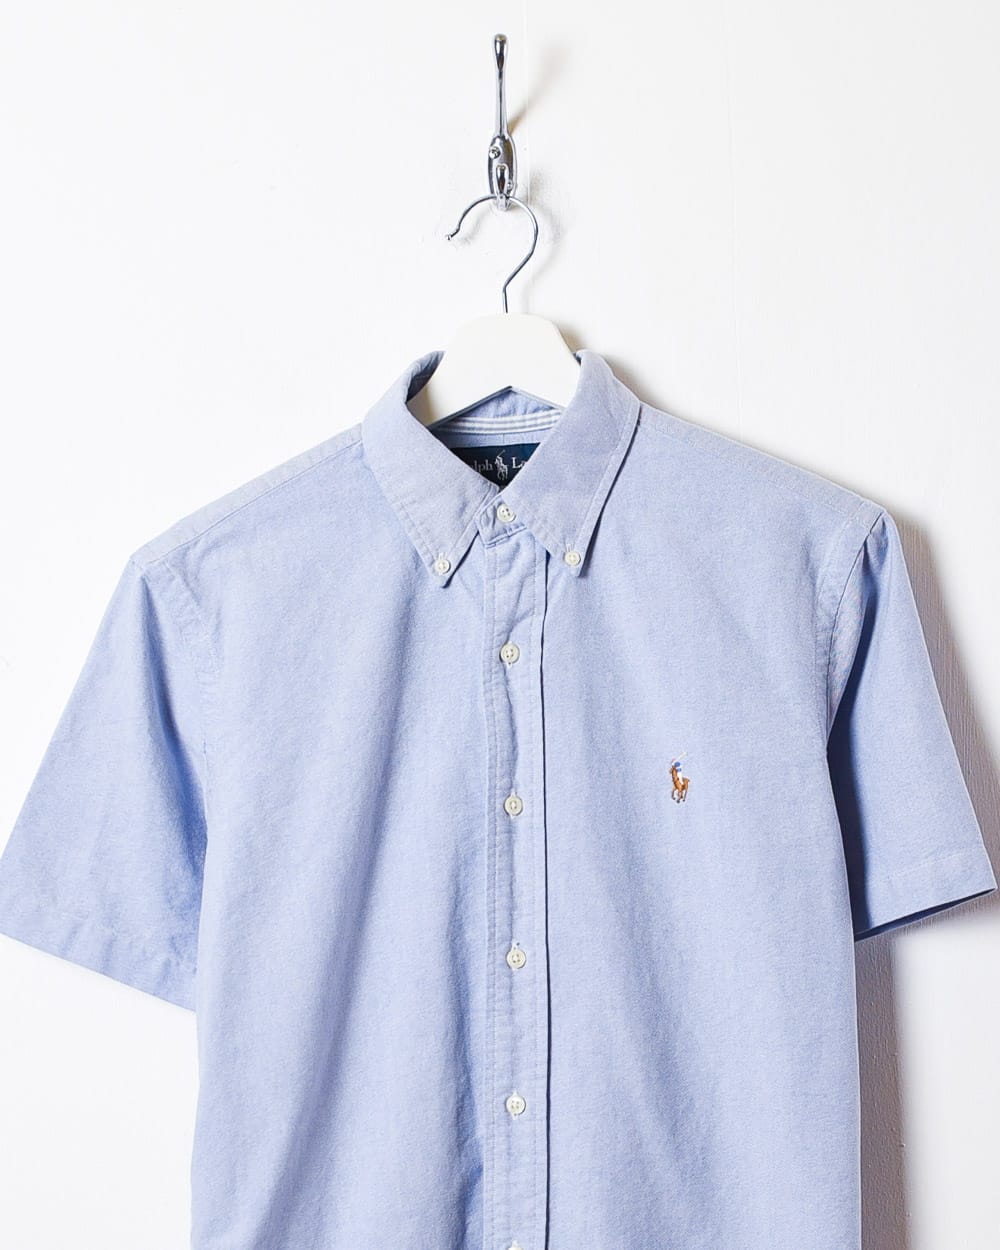 BabyBlue Polo Ralph Lauren Short Sleeved Shirt - Small